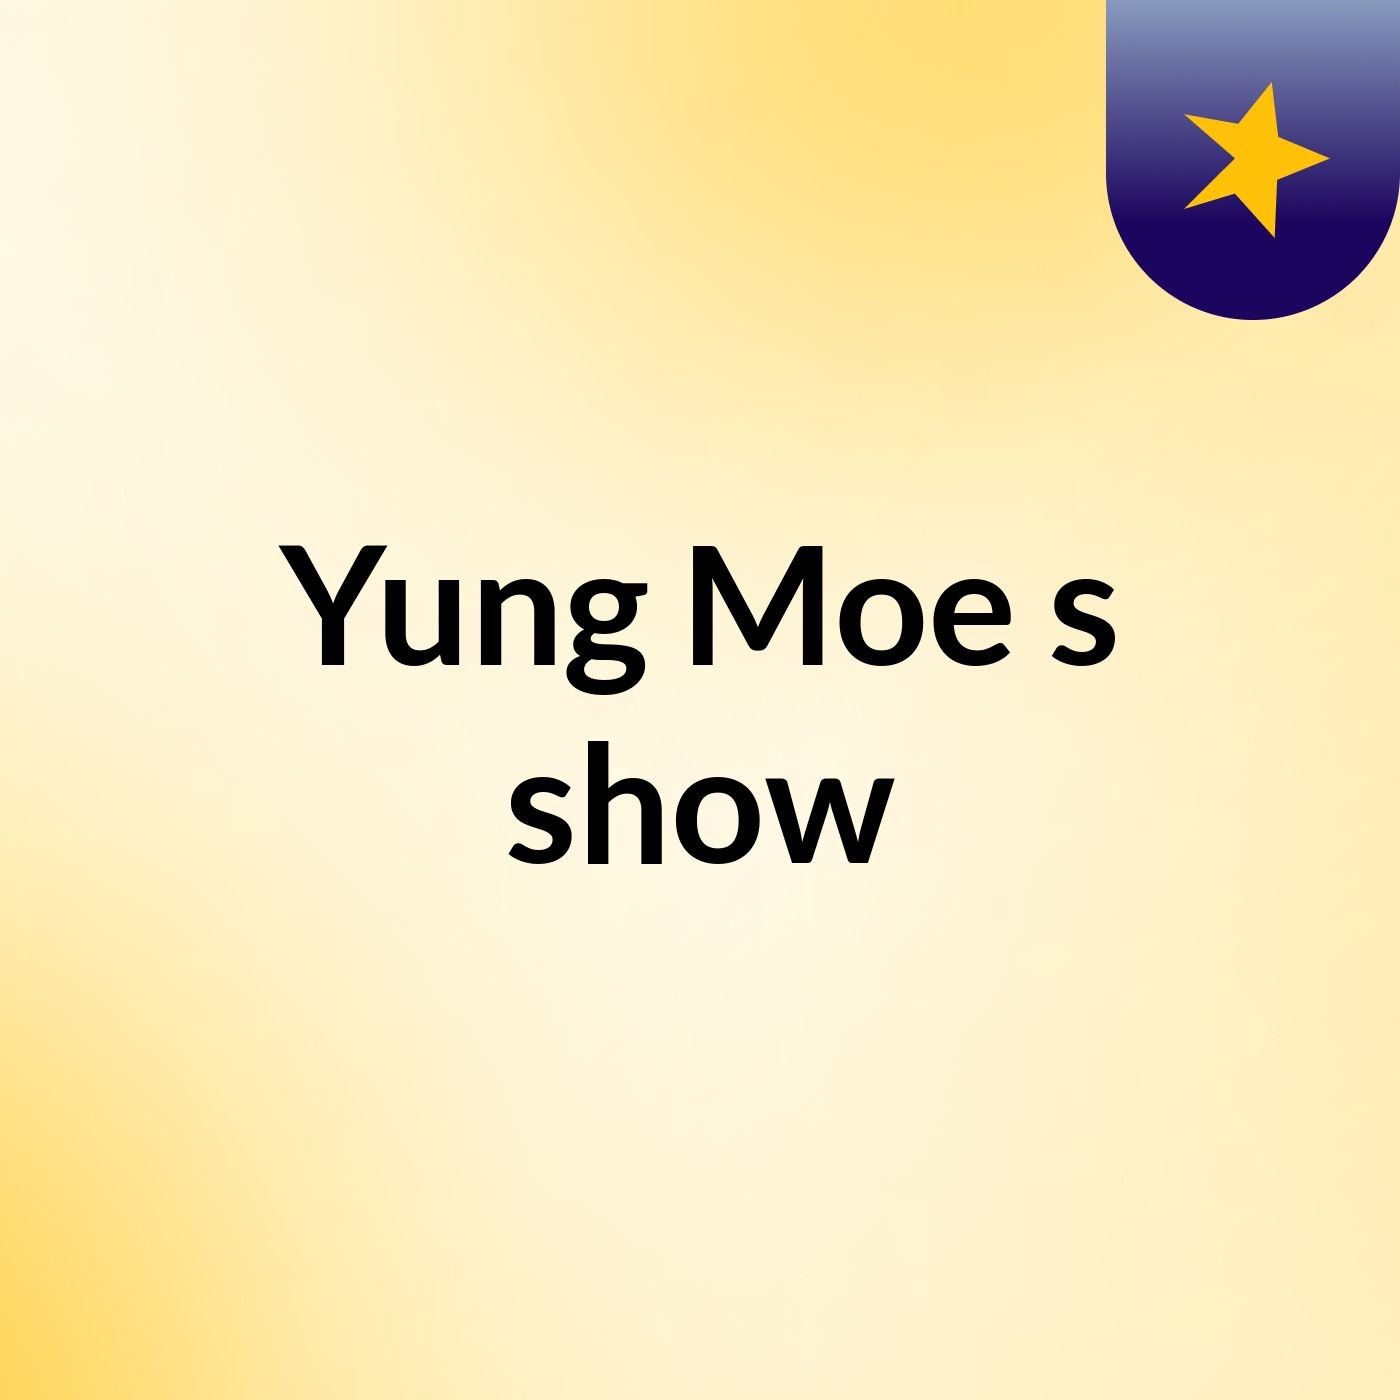 Yung Moe's show